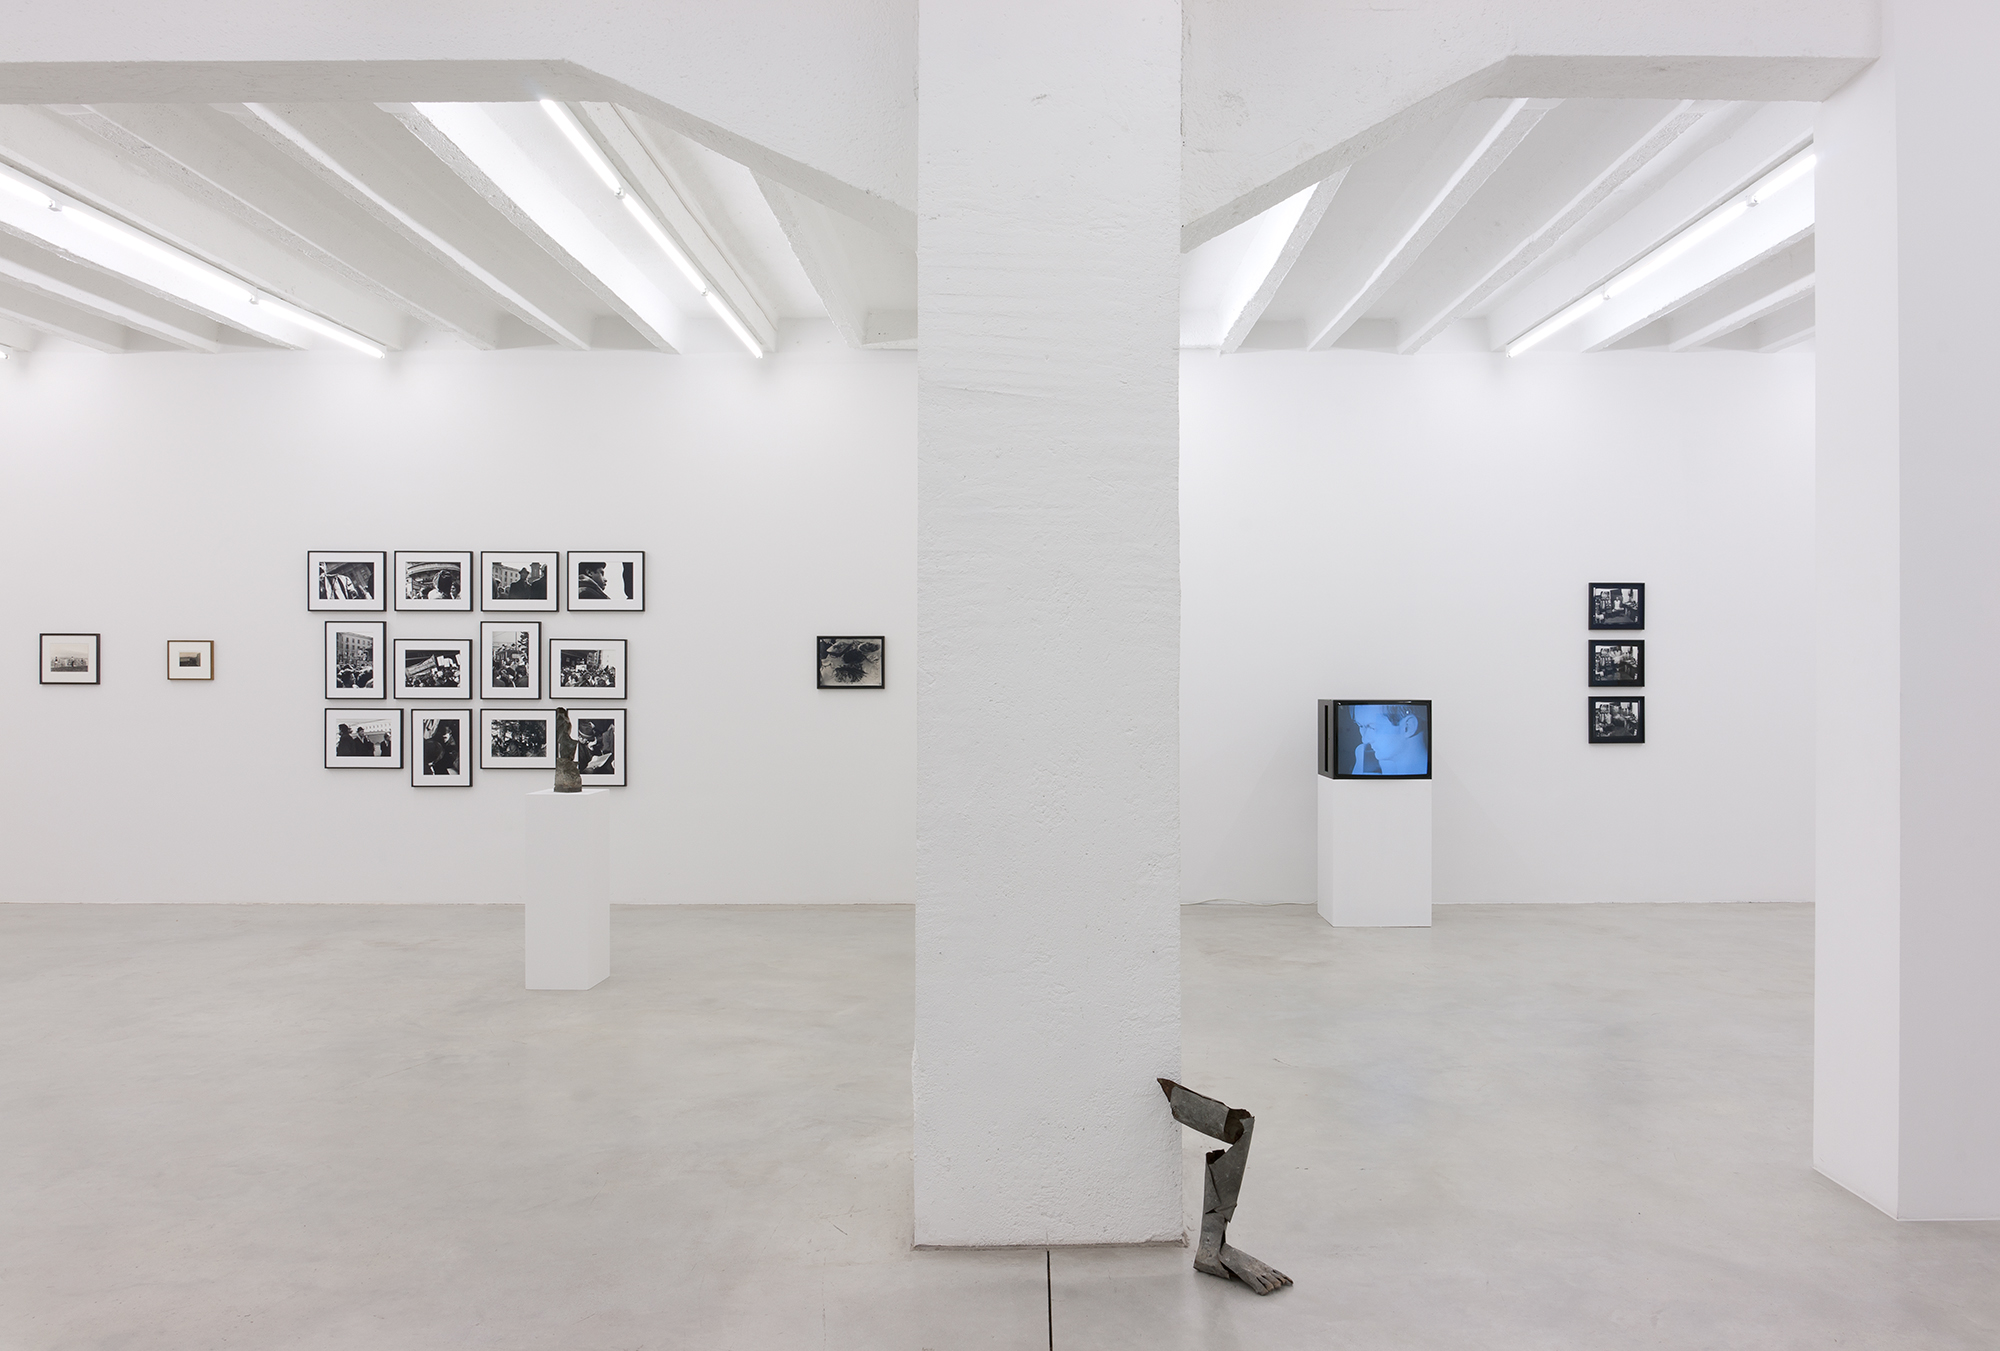 Exhibition view at Galerija Gregor Podnar, Berlin, 2012. Photos: Marcus Schneider